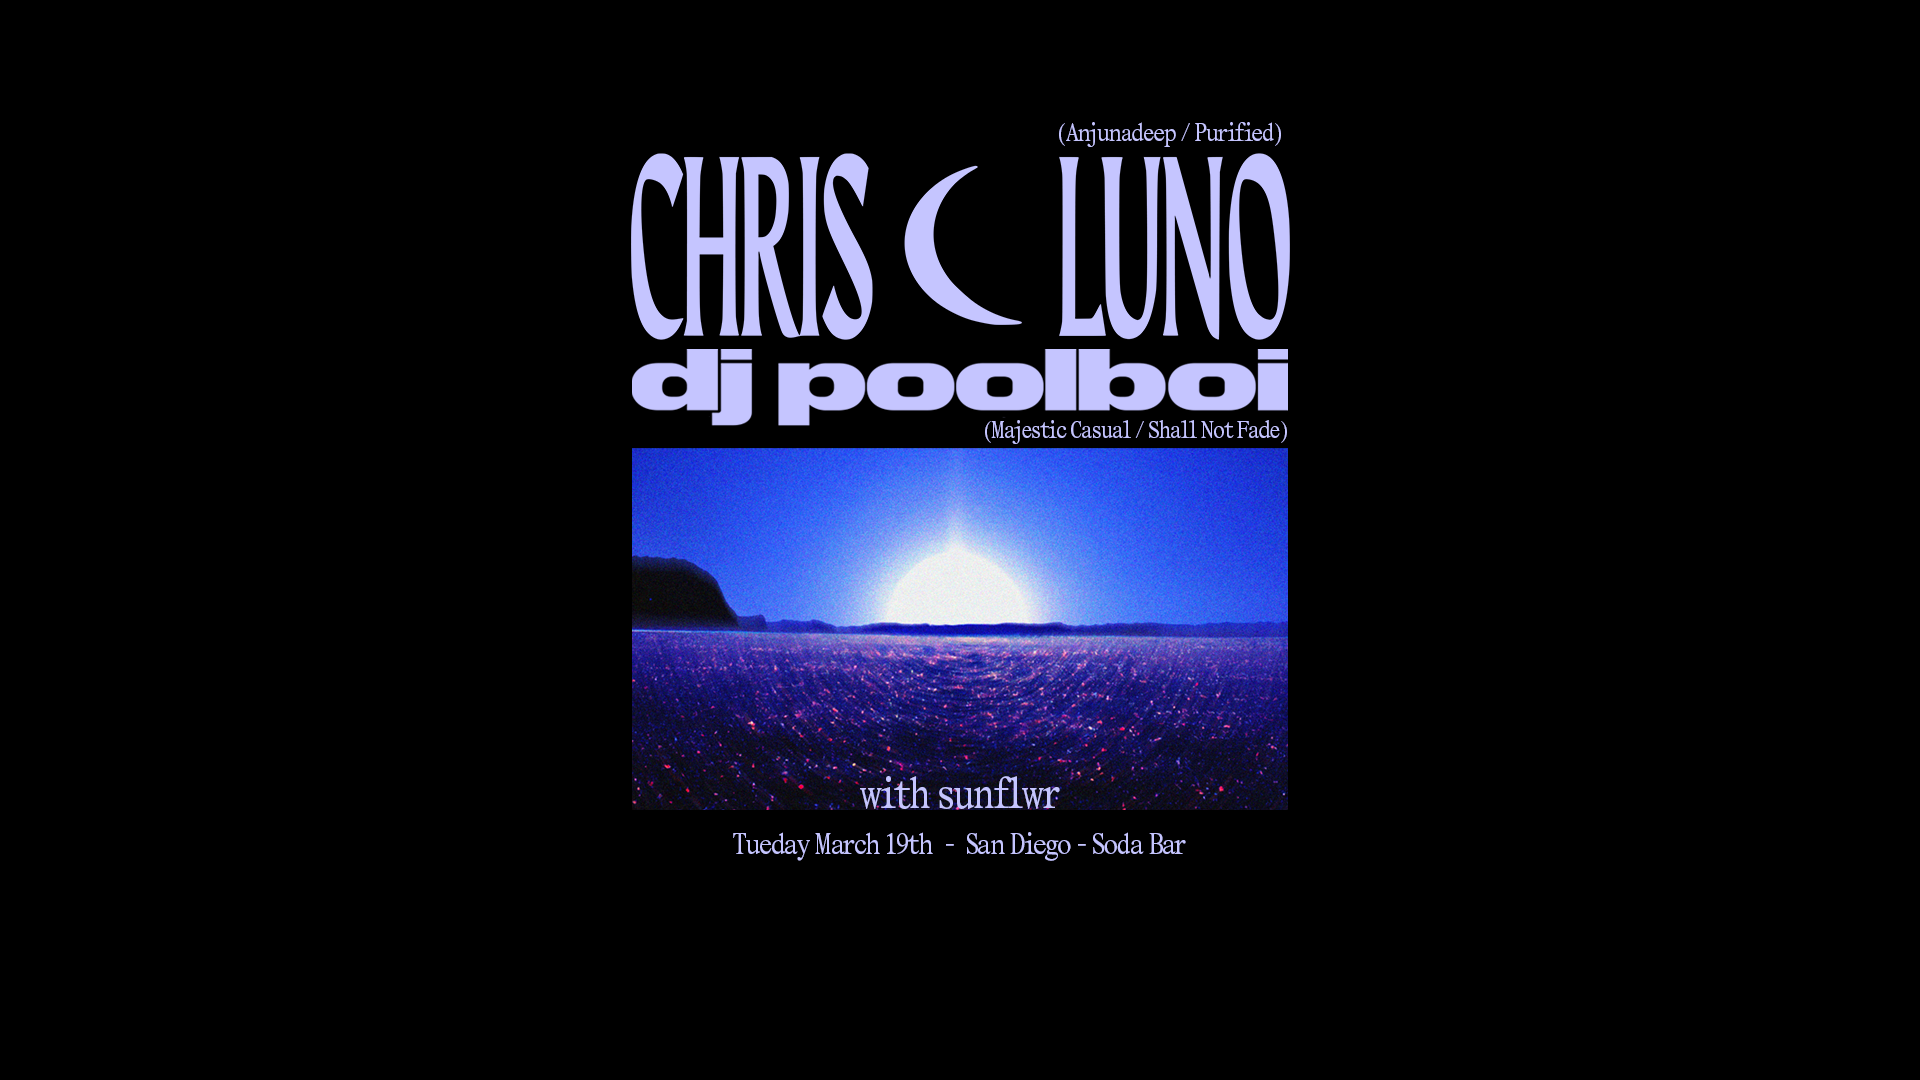 Chris Luno (Anjunadeep), dj poolboi (Majestic Casual) & sunflwr - Página frontal